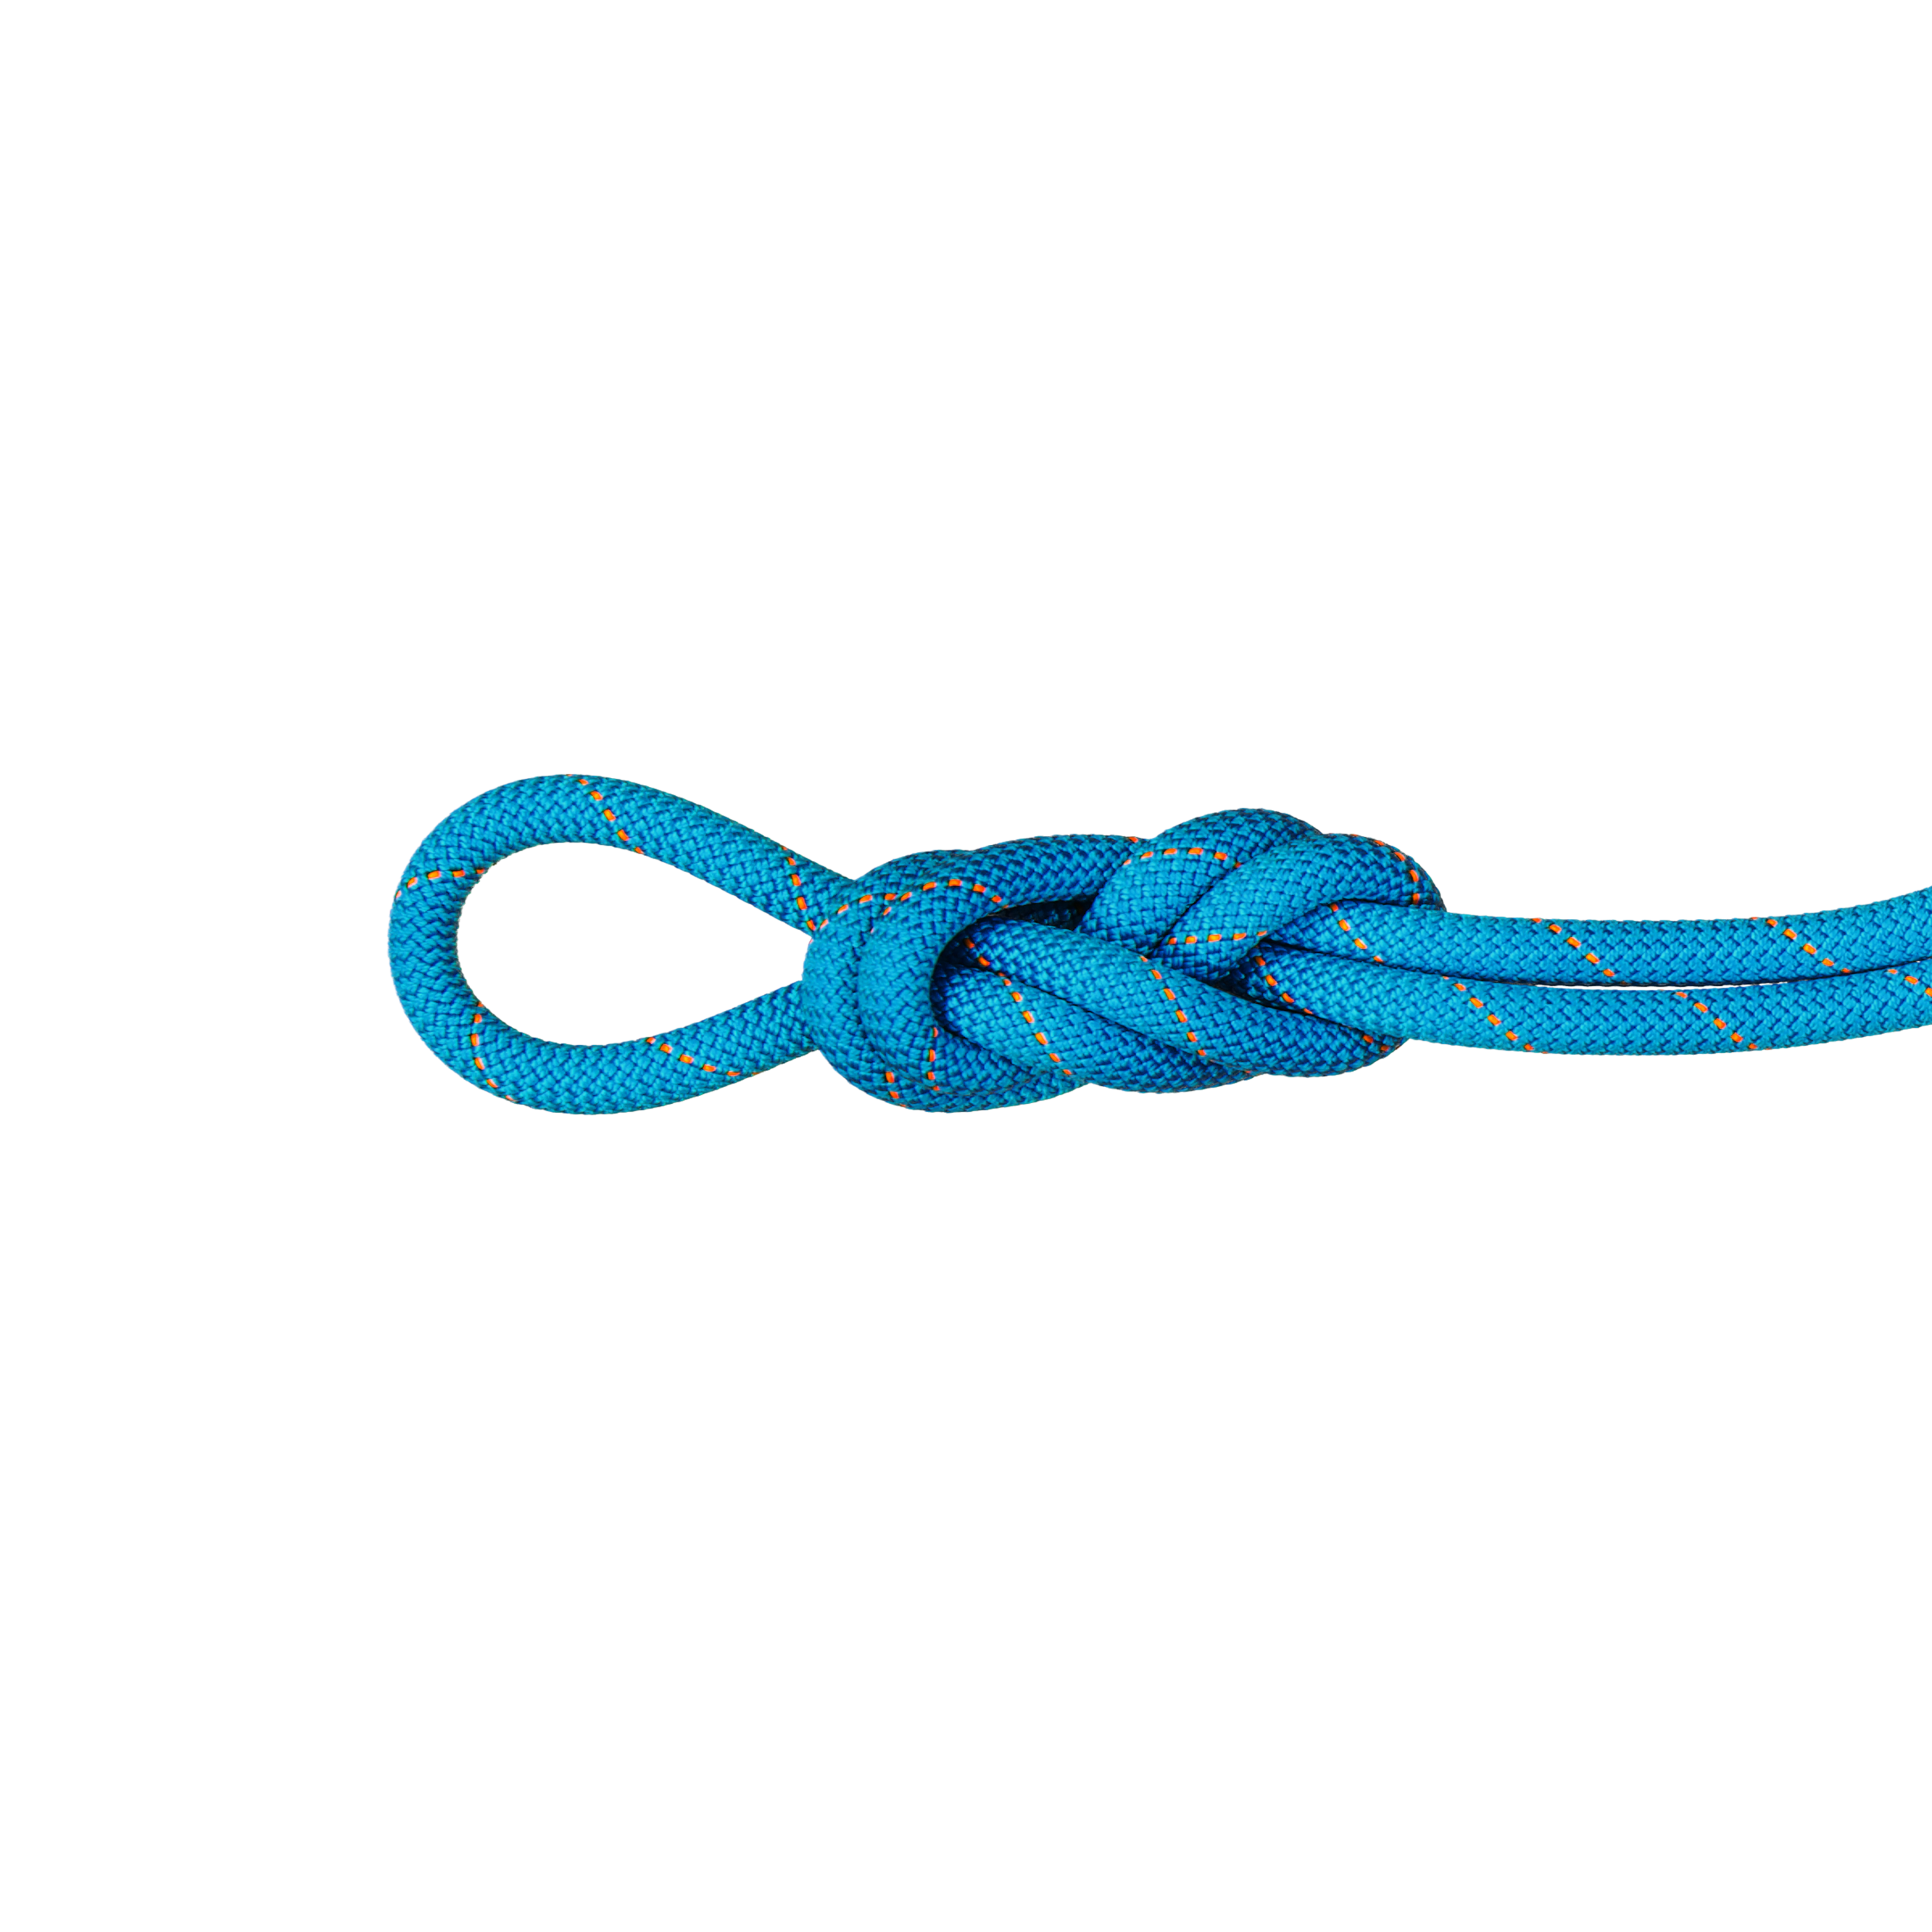 Mammut rope in blue